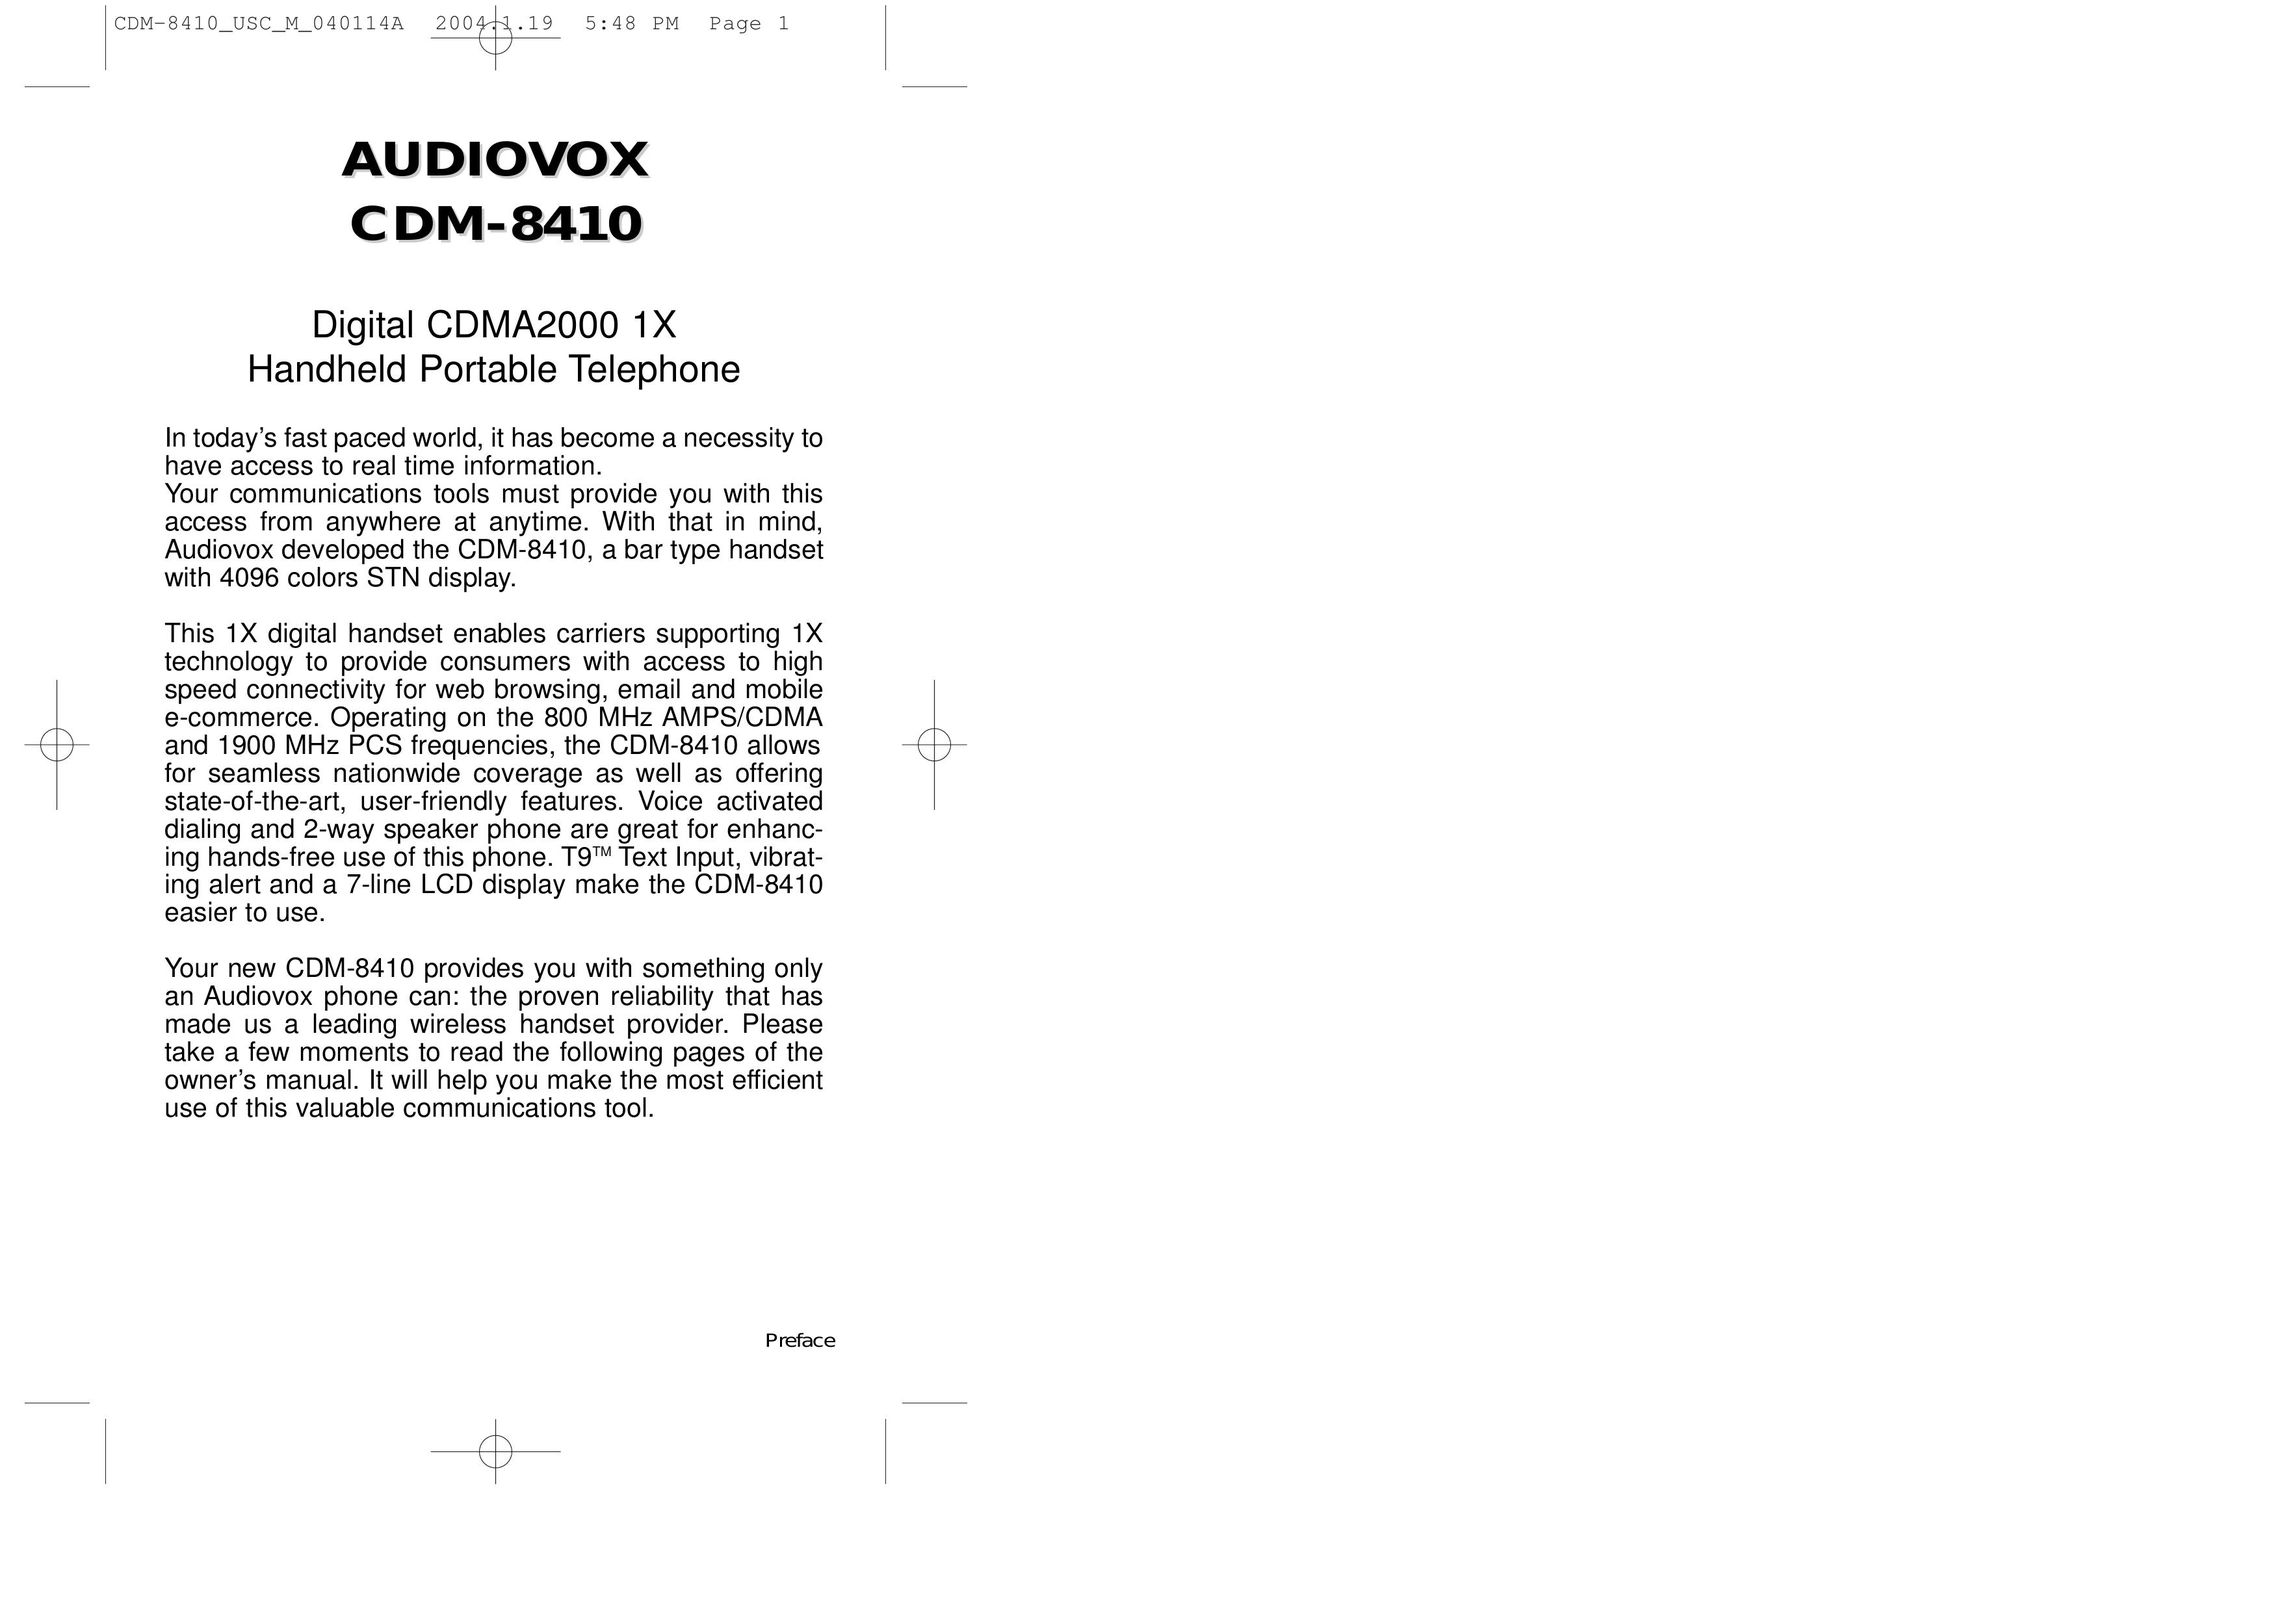 Audiovox CDM-8410 Telephone User Manual